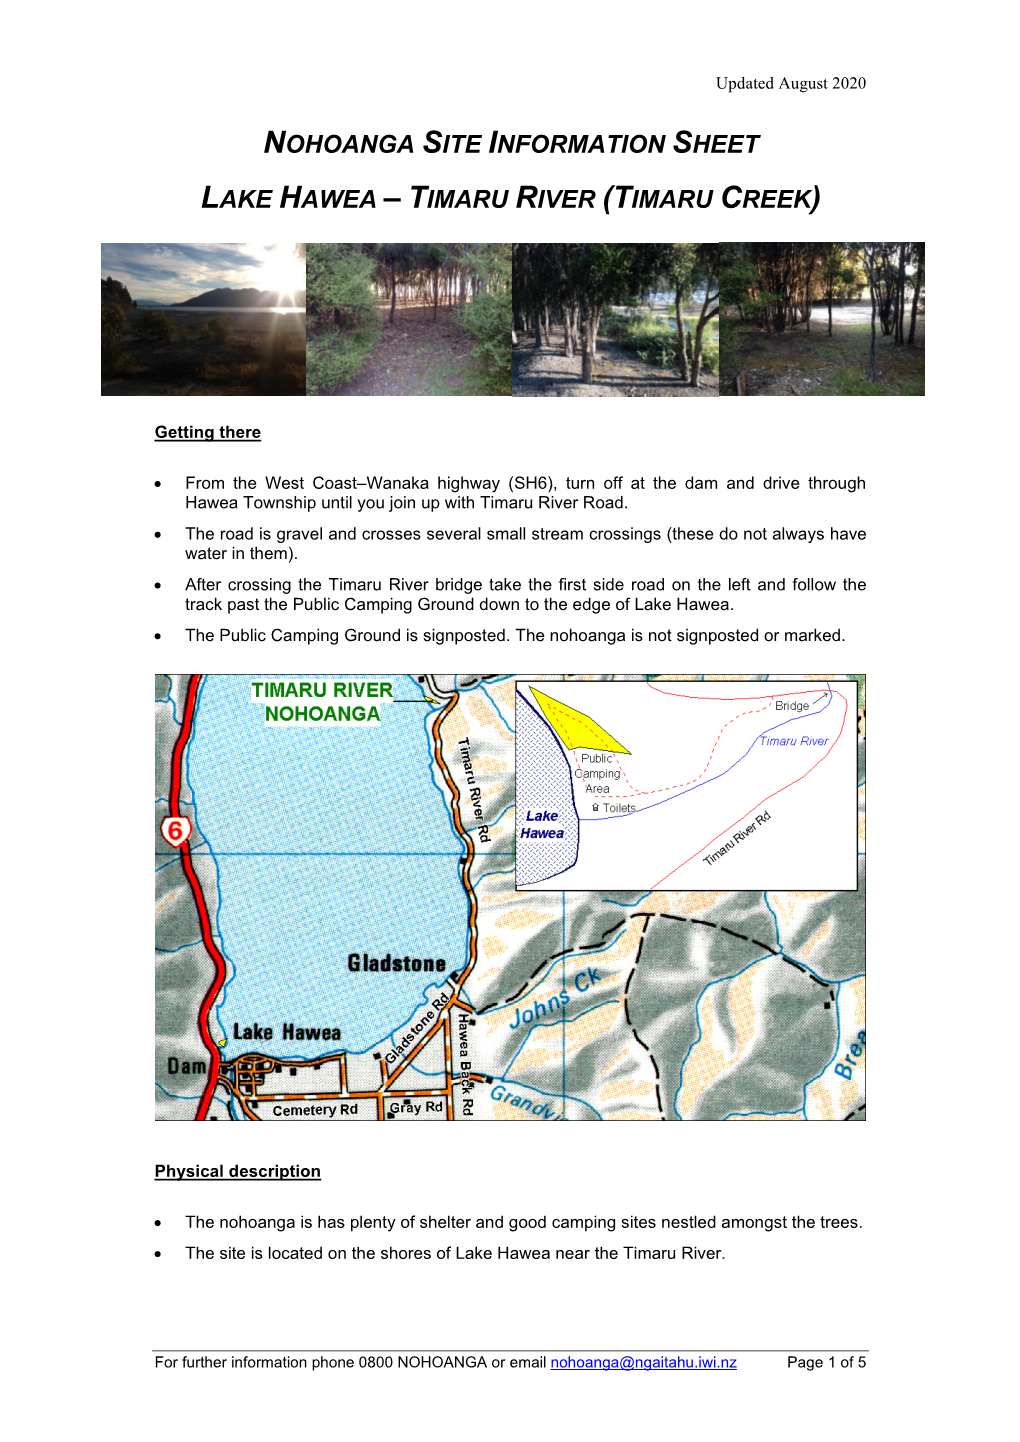 Nohoanga Site Information Sheet Lake Hawea – Timaru River